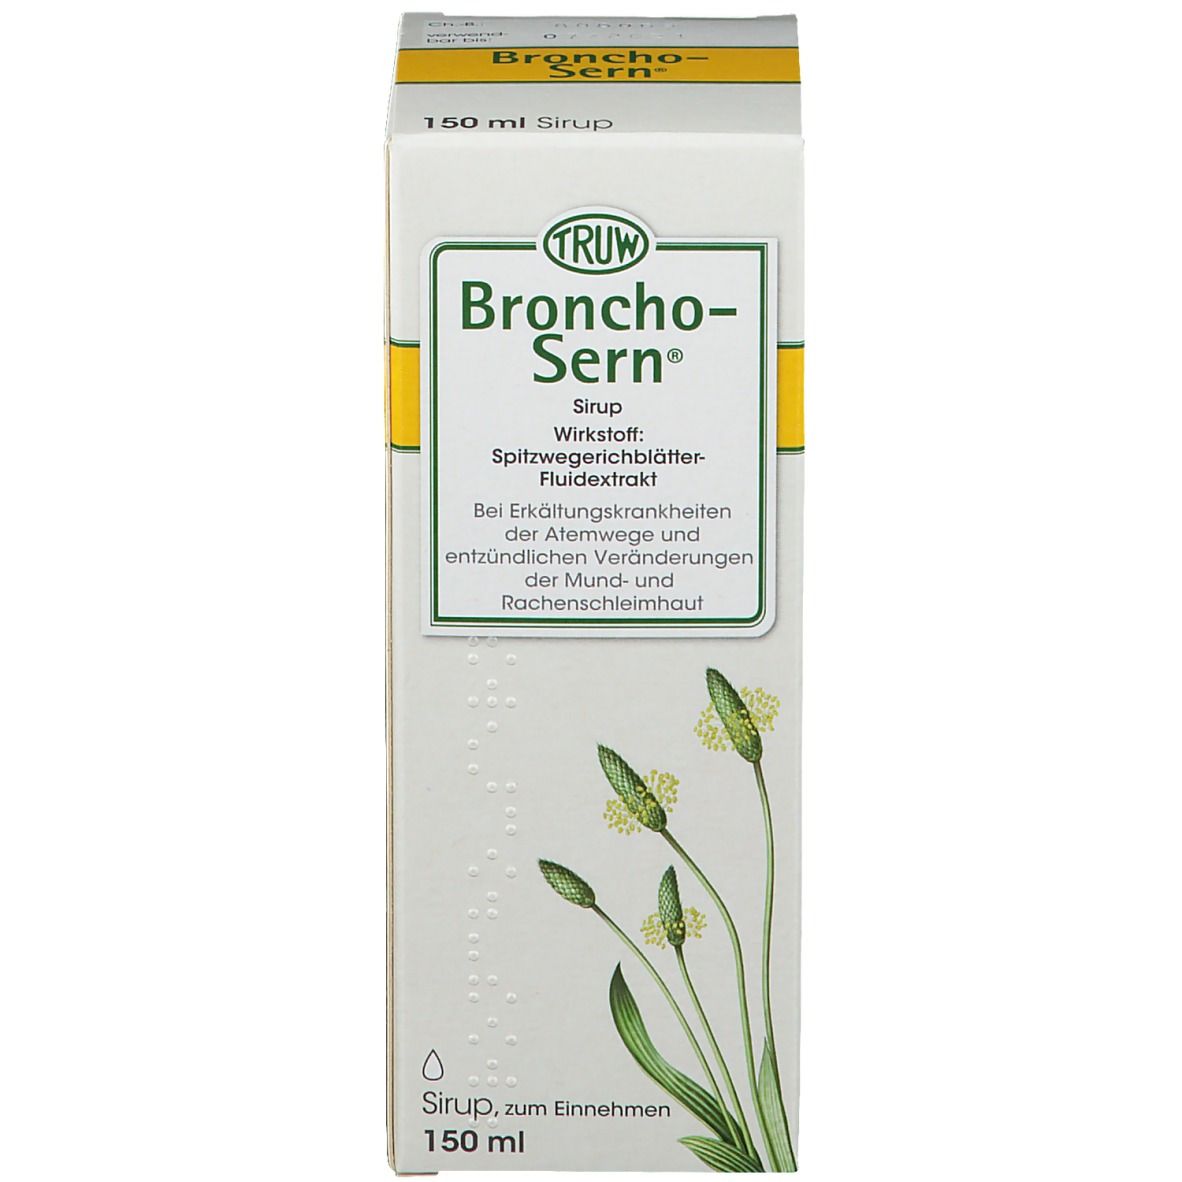 Broncho-Sern® Sirup